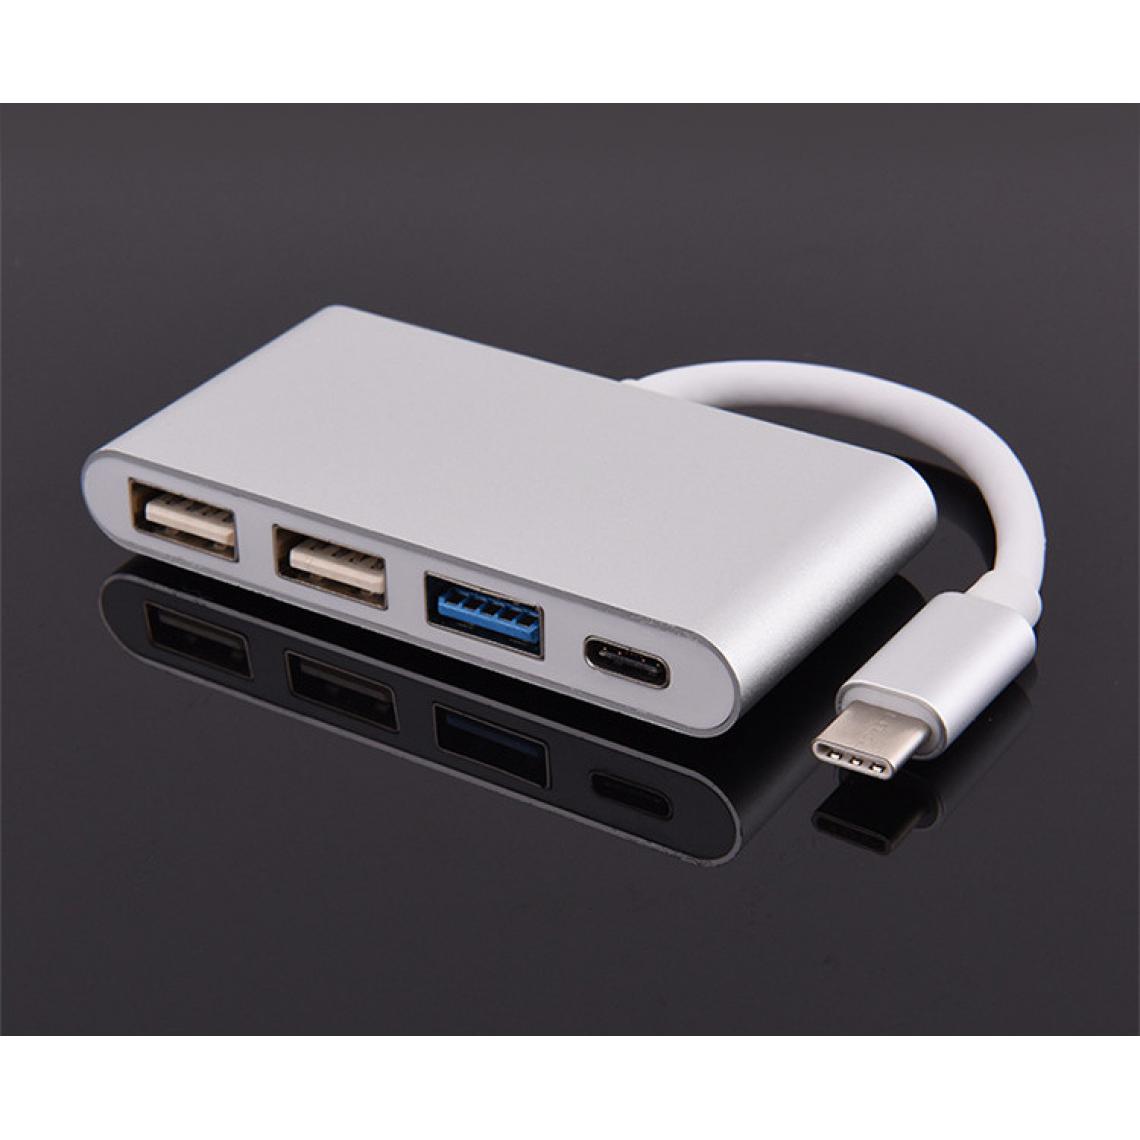 Shot - Multi Adaptateur 4 en 1 Type C pour SONY Xperia XZ Premium Smartphone Hub 2 ports USB 2.0 1 Port USB 3.0 (ARGENT) - Hub